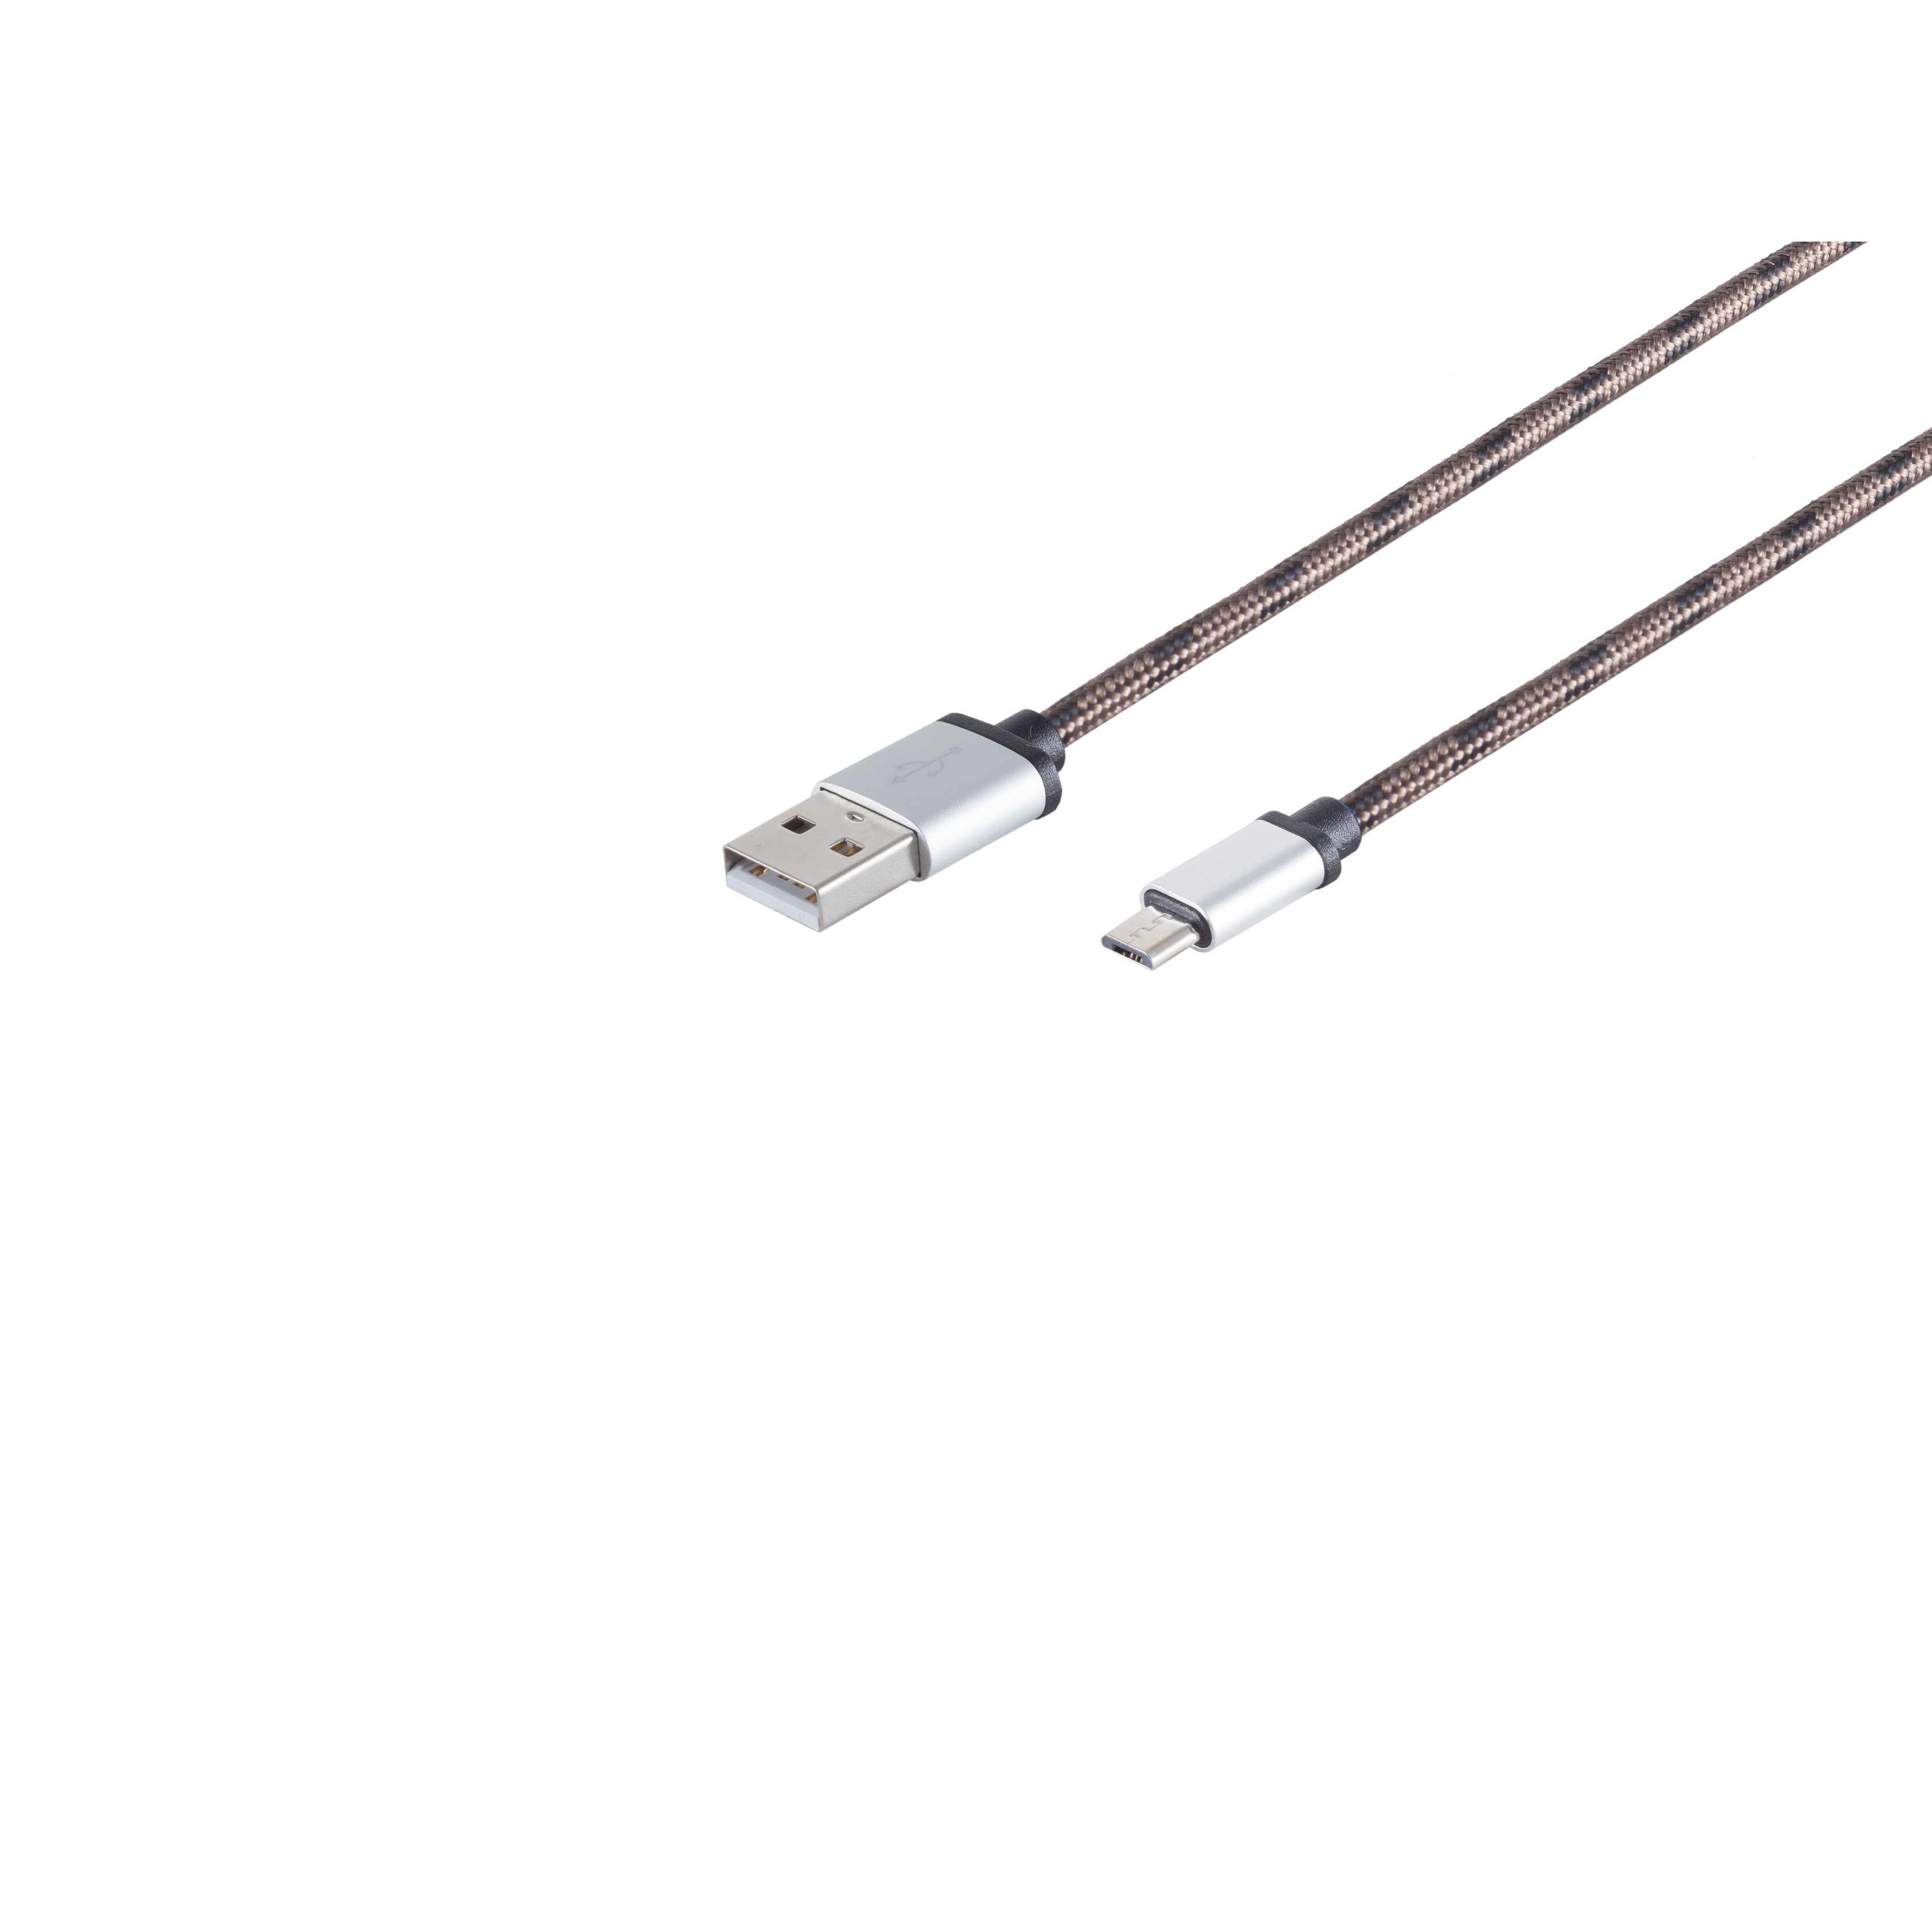 Stecker braun CONNECTIVITY B auf MAXIMUM A USB Micro USB-Ladekabel S/CONN Kabel 2m USB